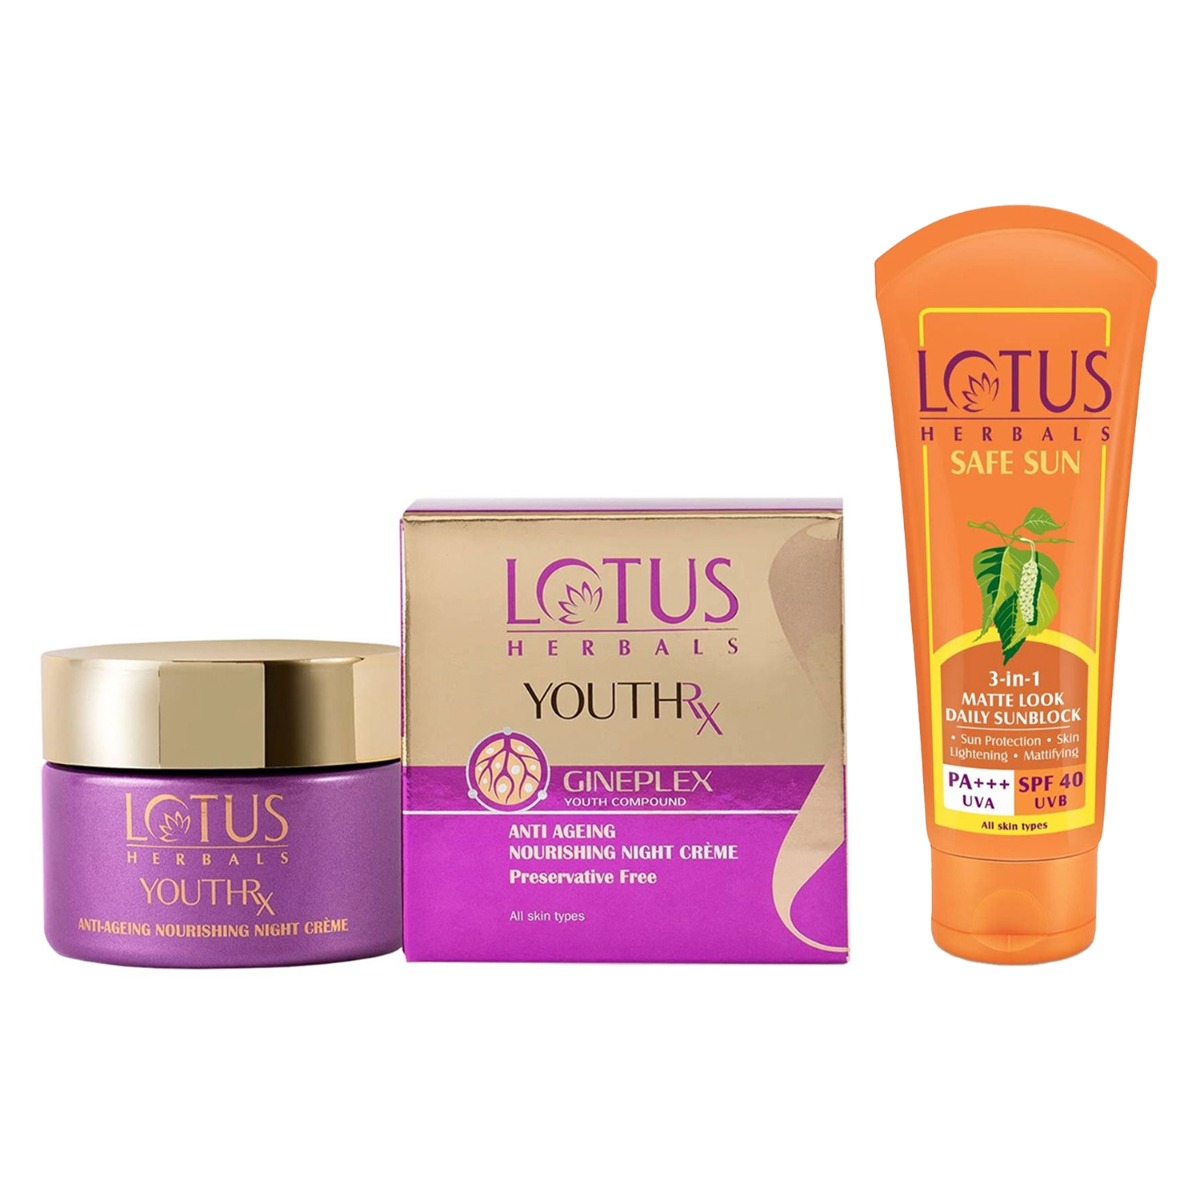 Lotus Herbals Safe Sun 3-in-1 Matte Look Daily Sunblock Pa+++ SPF 40, 50gm & YouthRx Anti Ageing Nourishing Night Cream For Women, 10gm